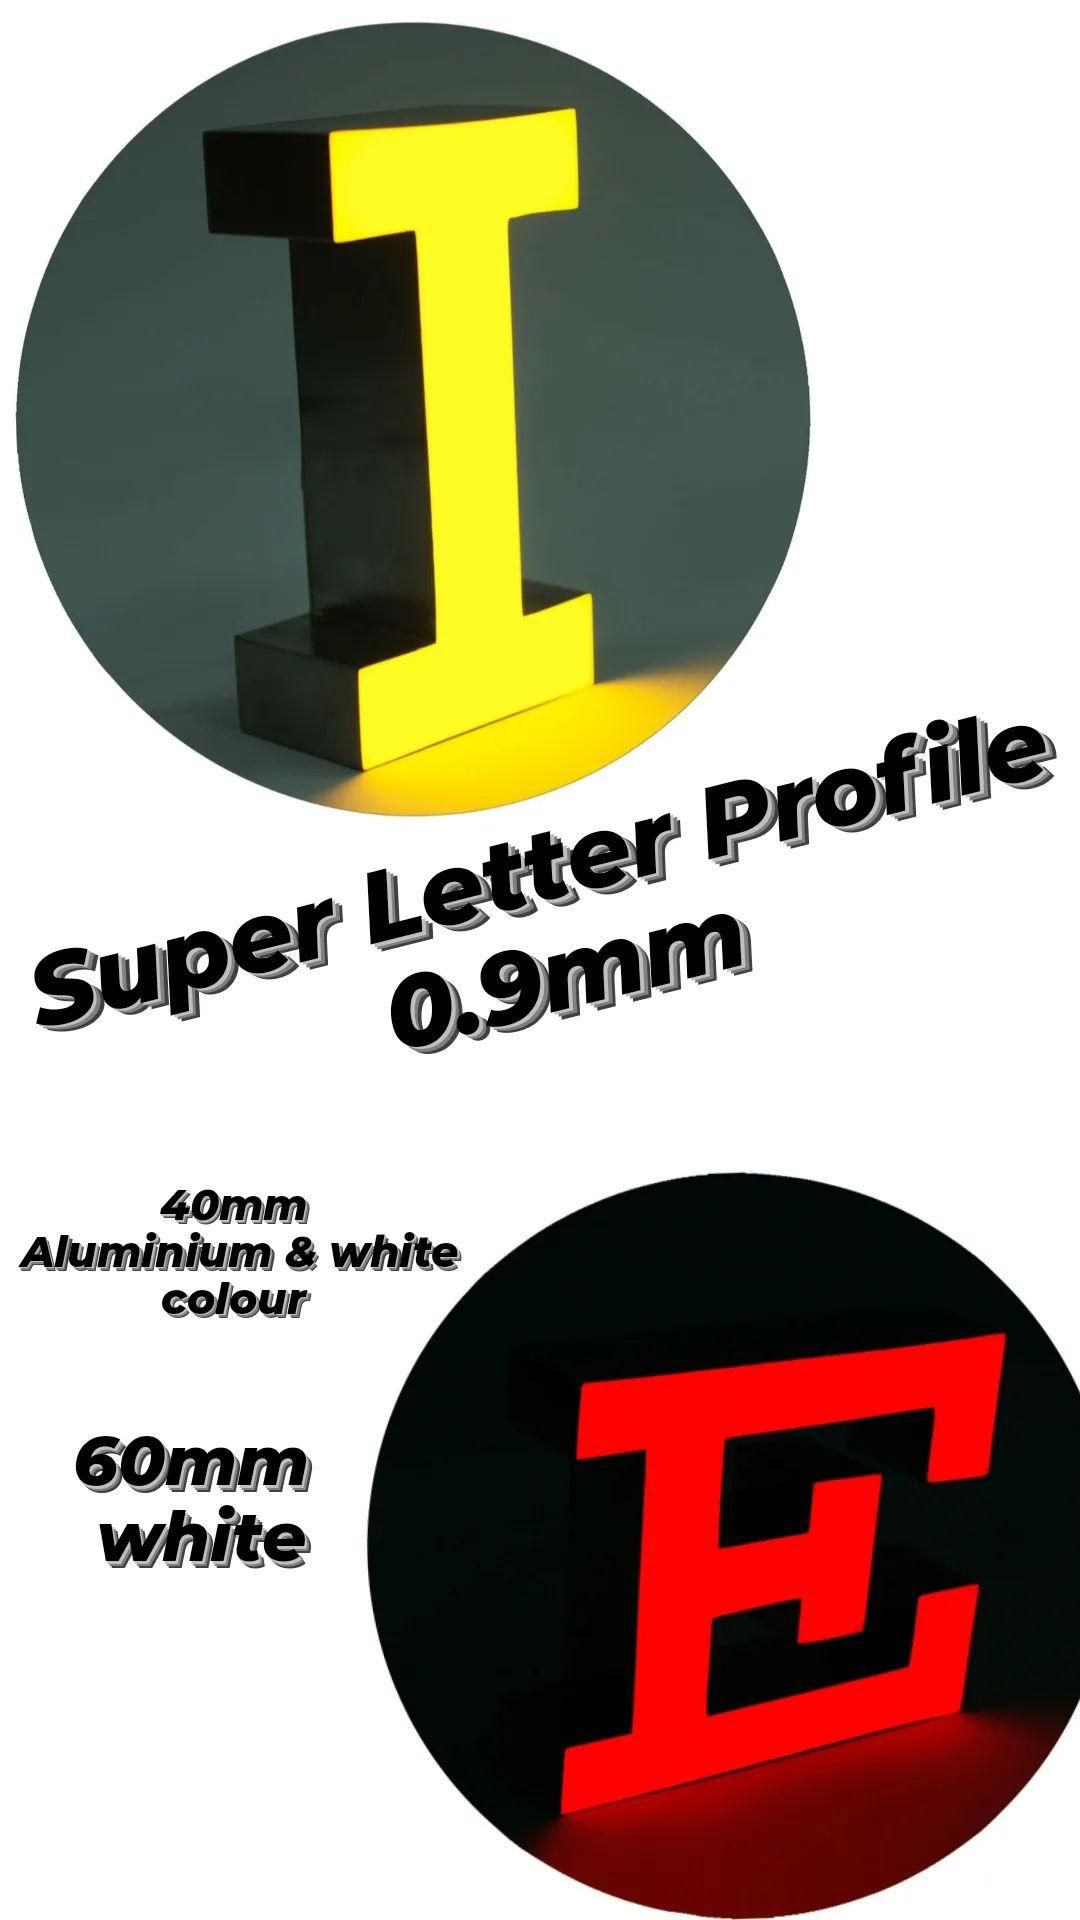 Super Letter profile - the most popular profile now